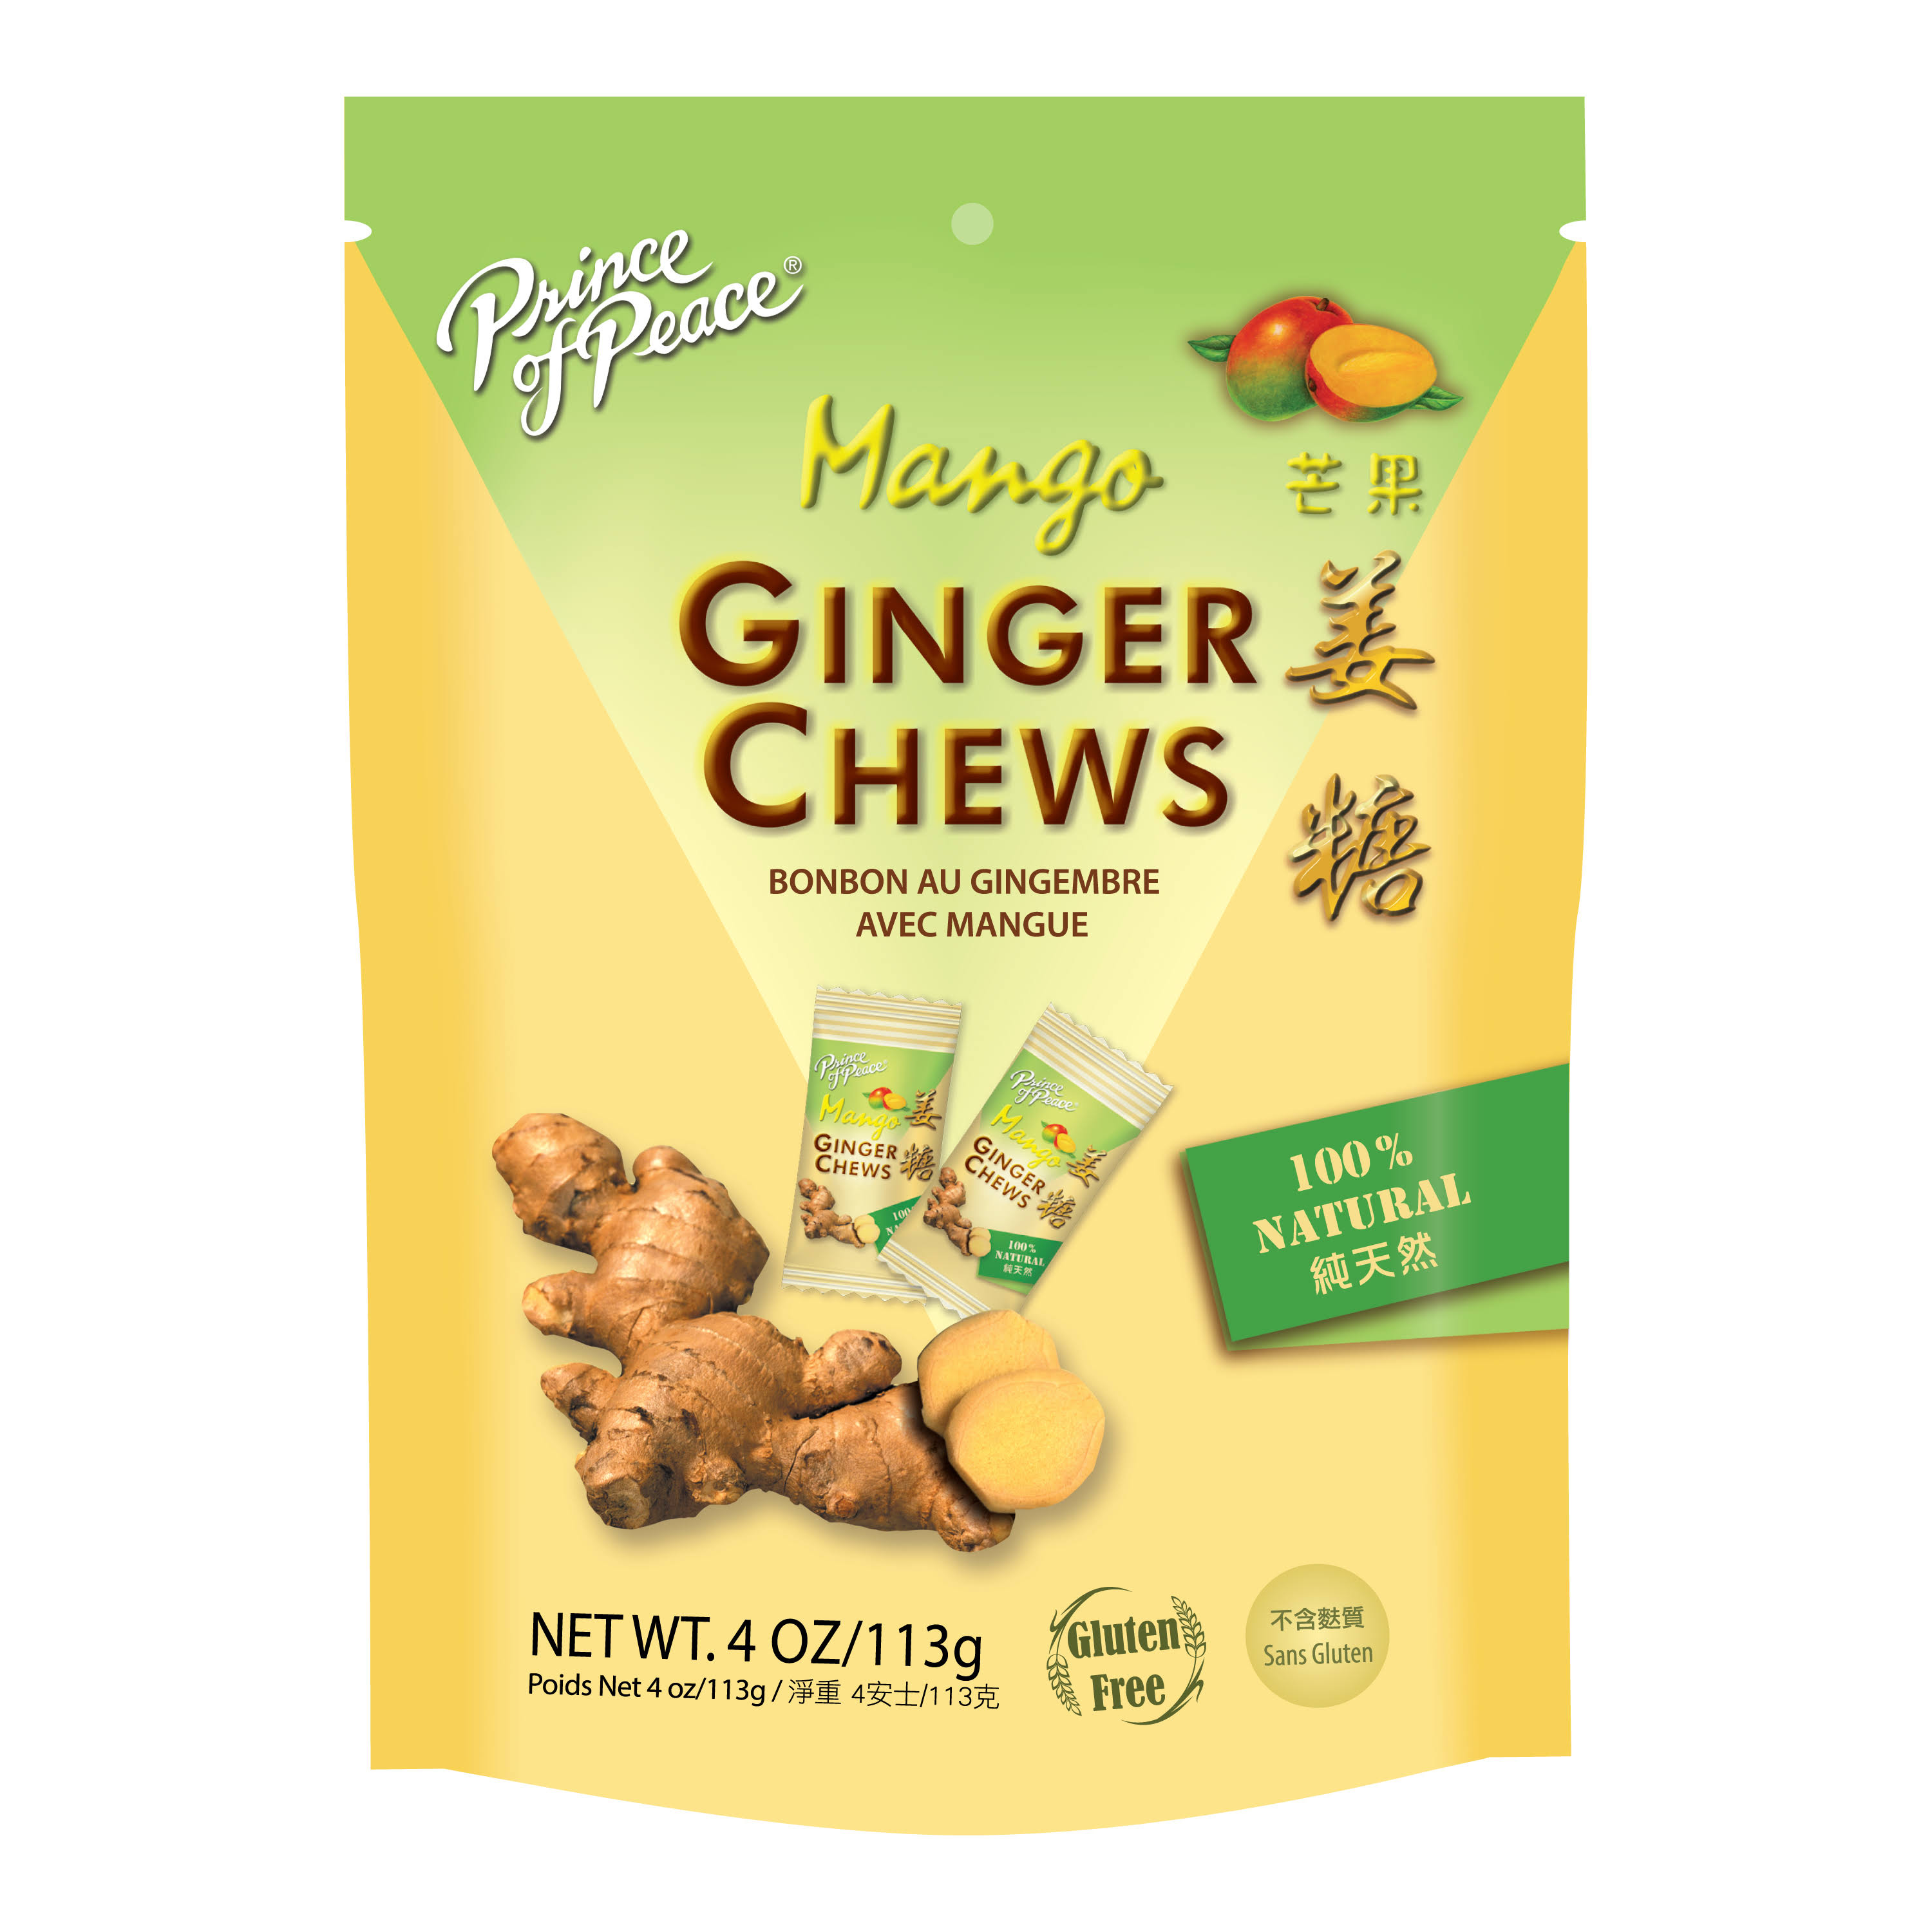 Prince of Peace Ginger Chews - Mango - 4 oz (113 g)